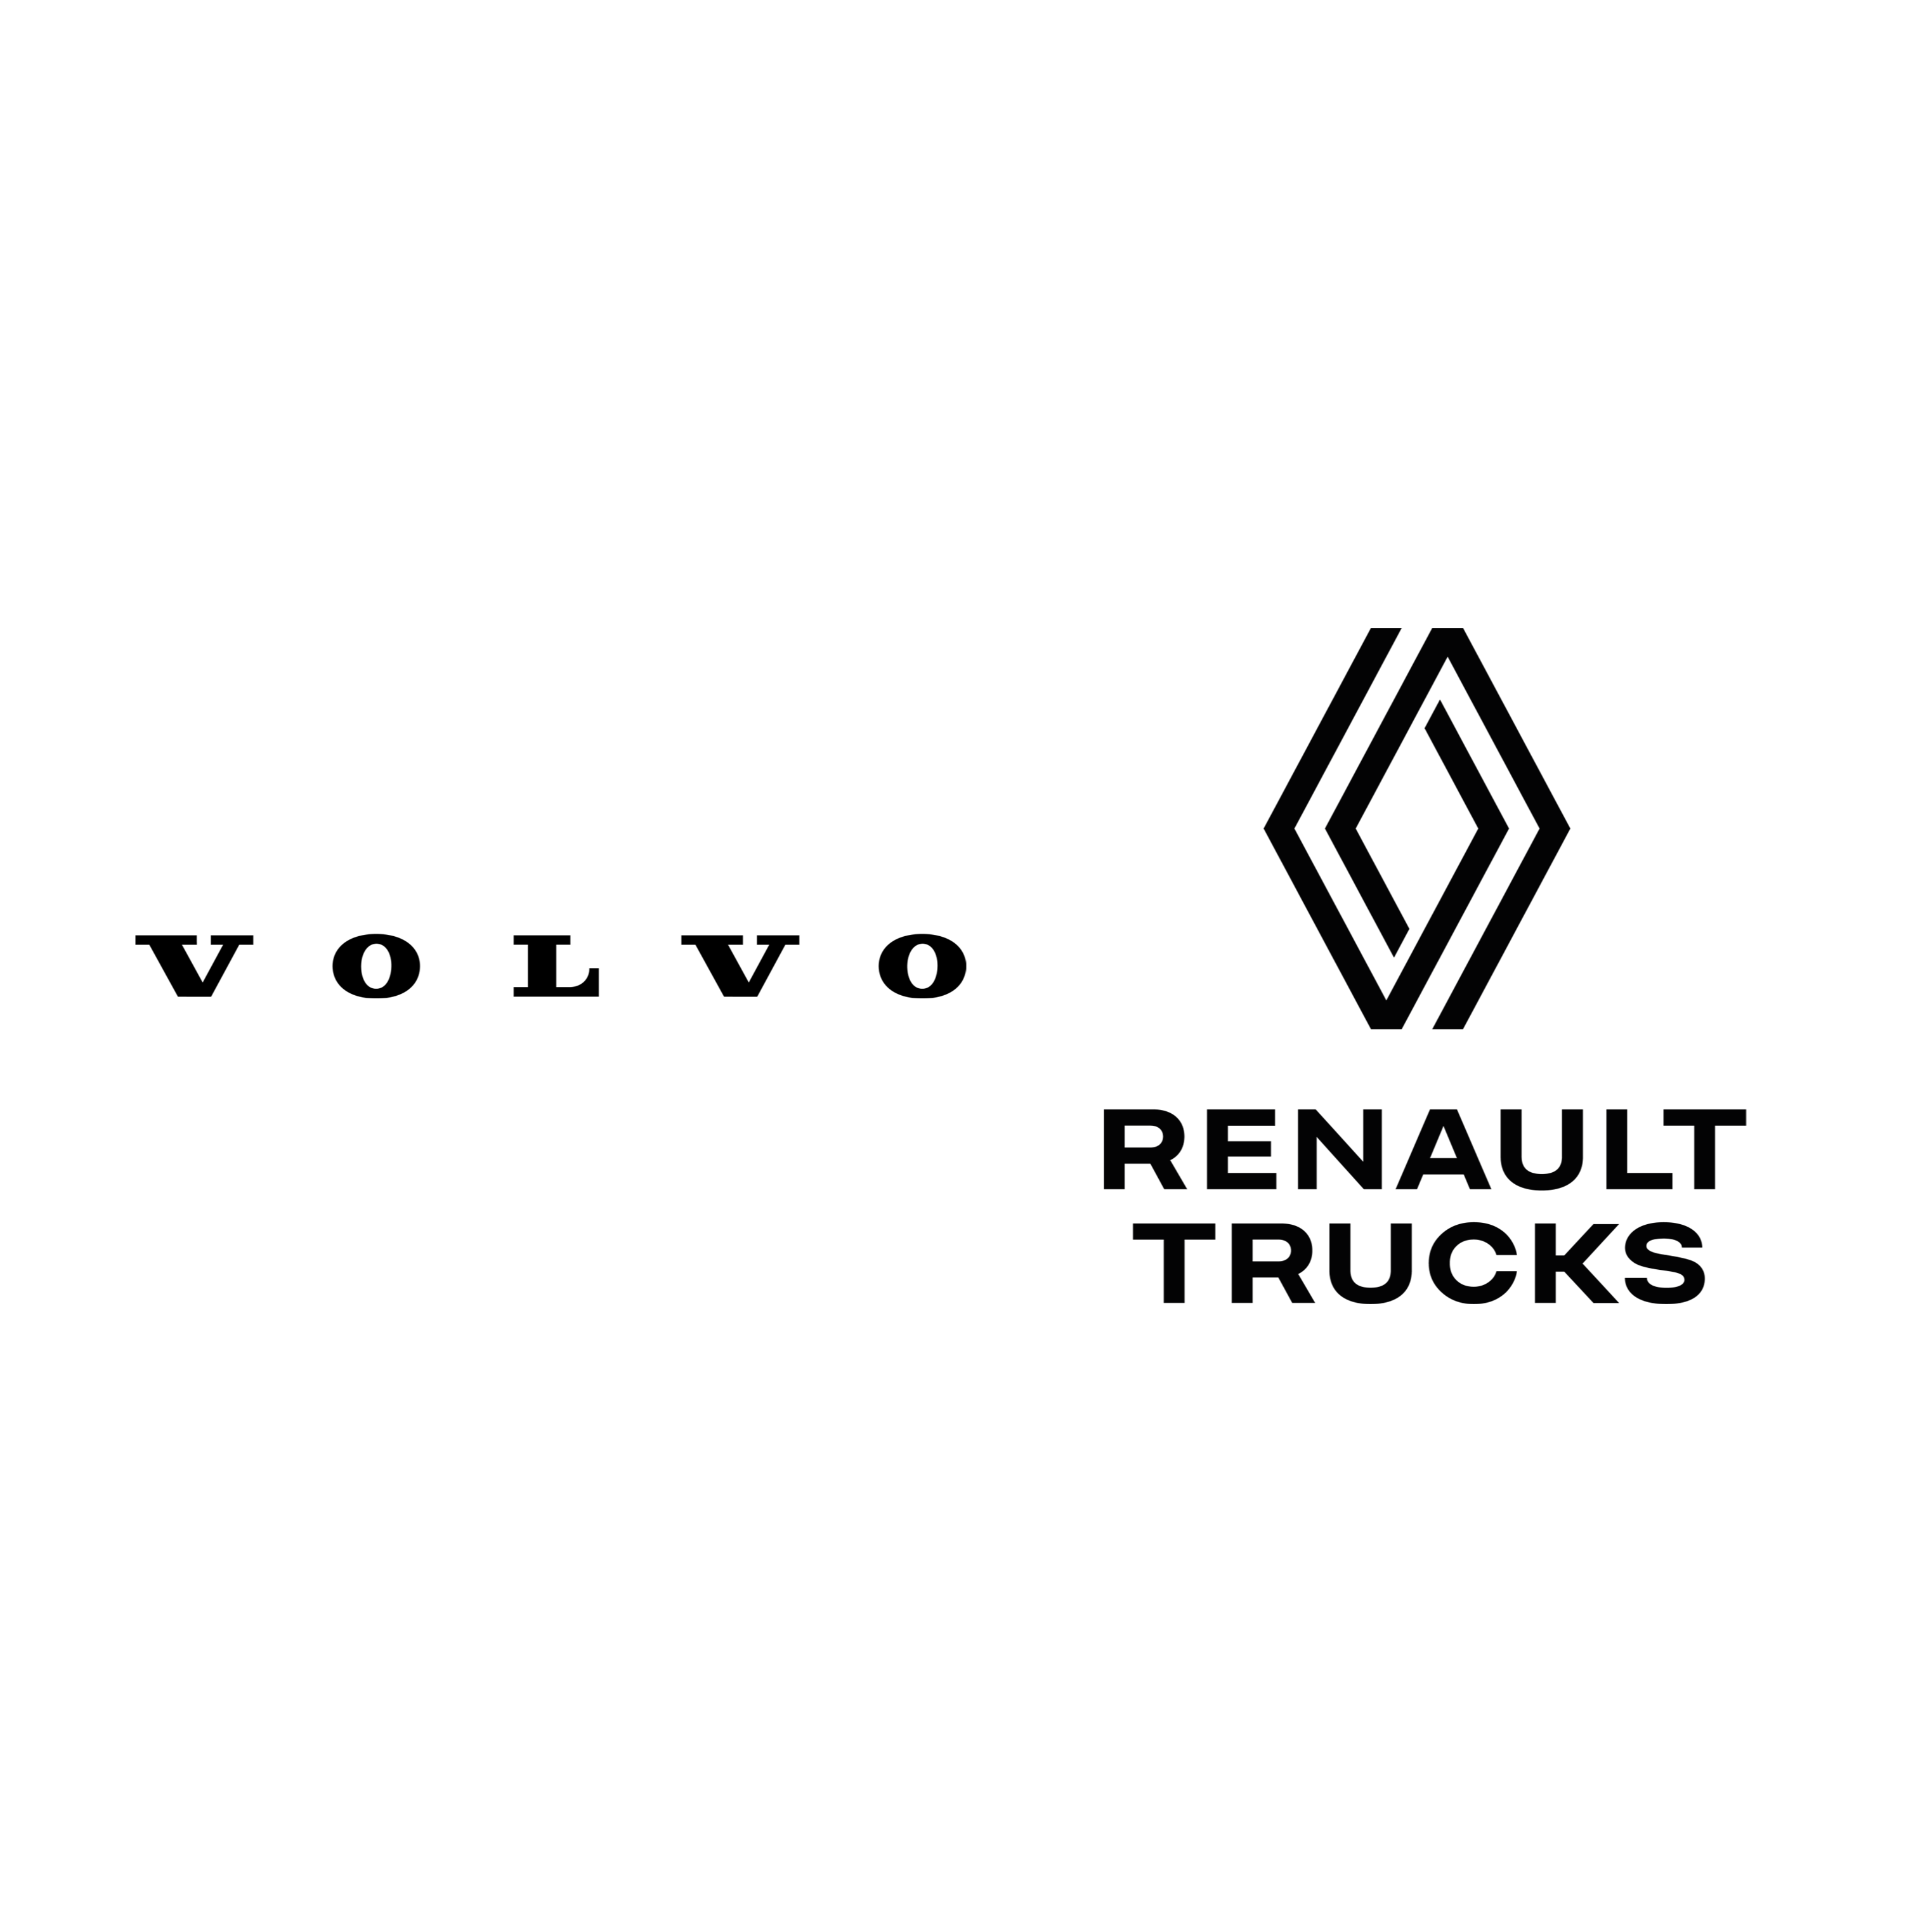 Volvo Trucks Berlin Renault Trucks Berlin in Berlin - Logo